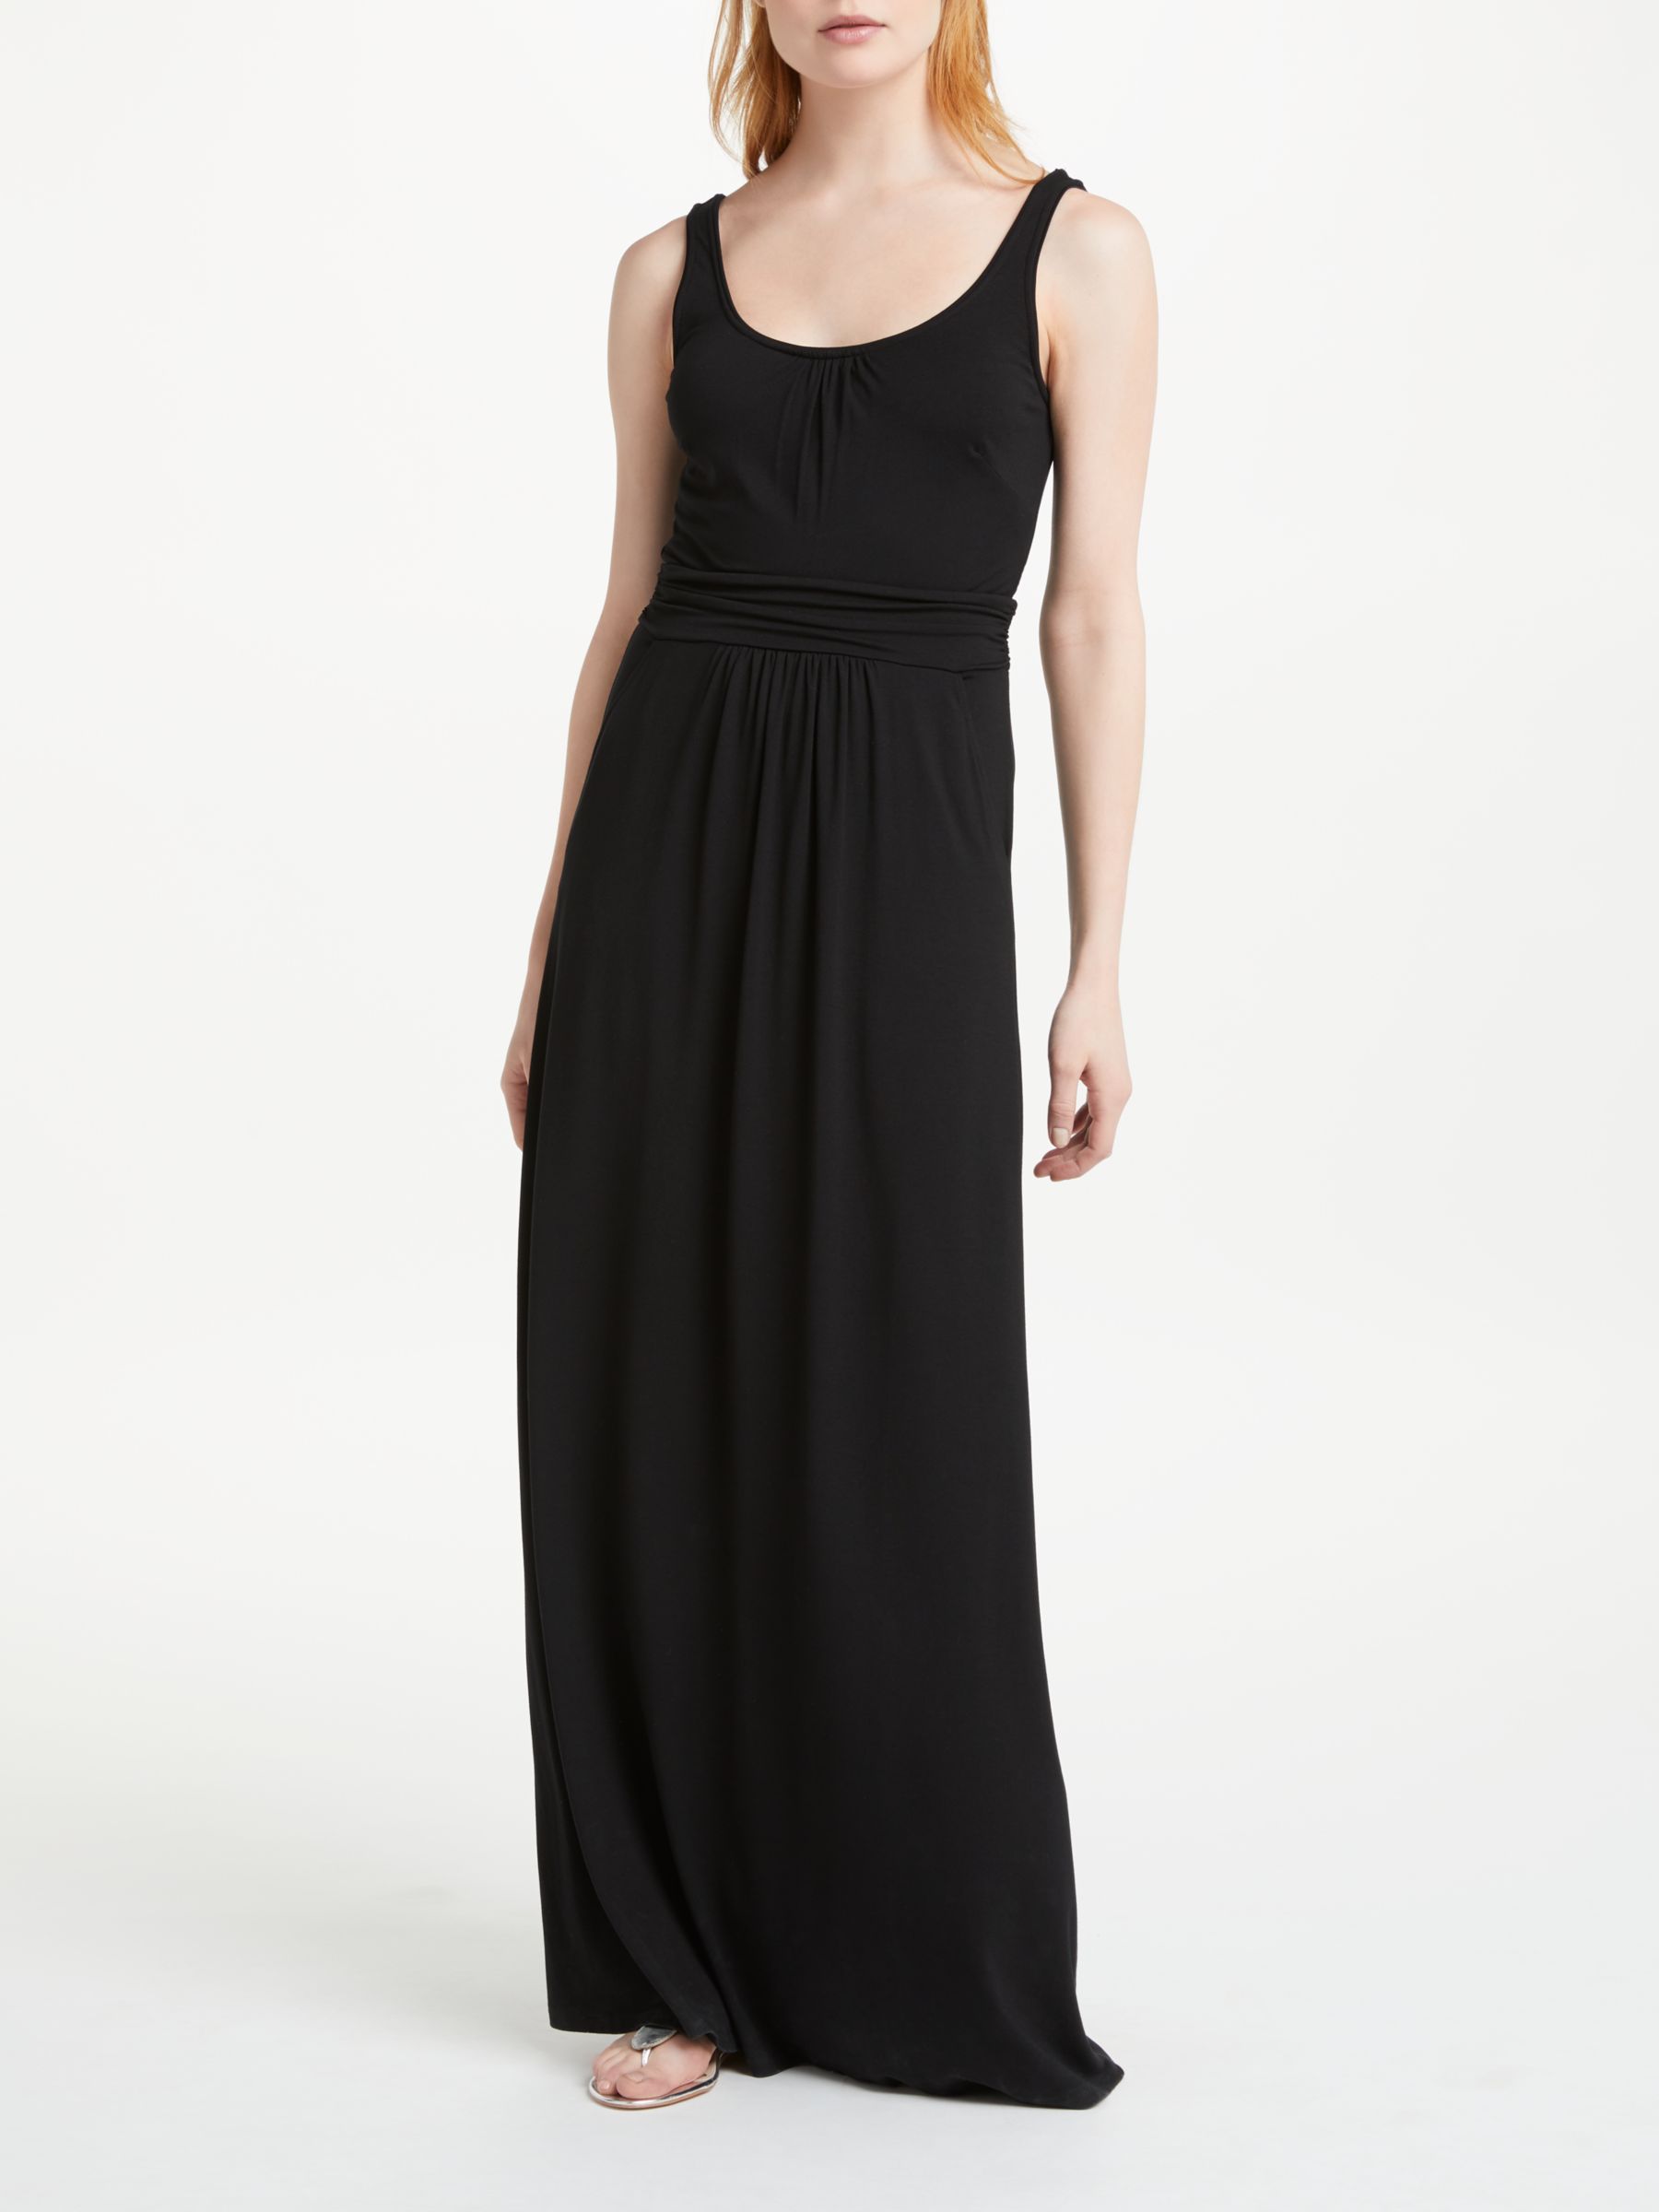 Boden Diana Jersey Maxi Dress, Black